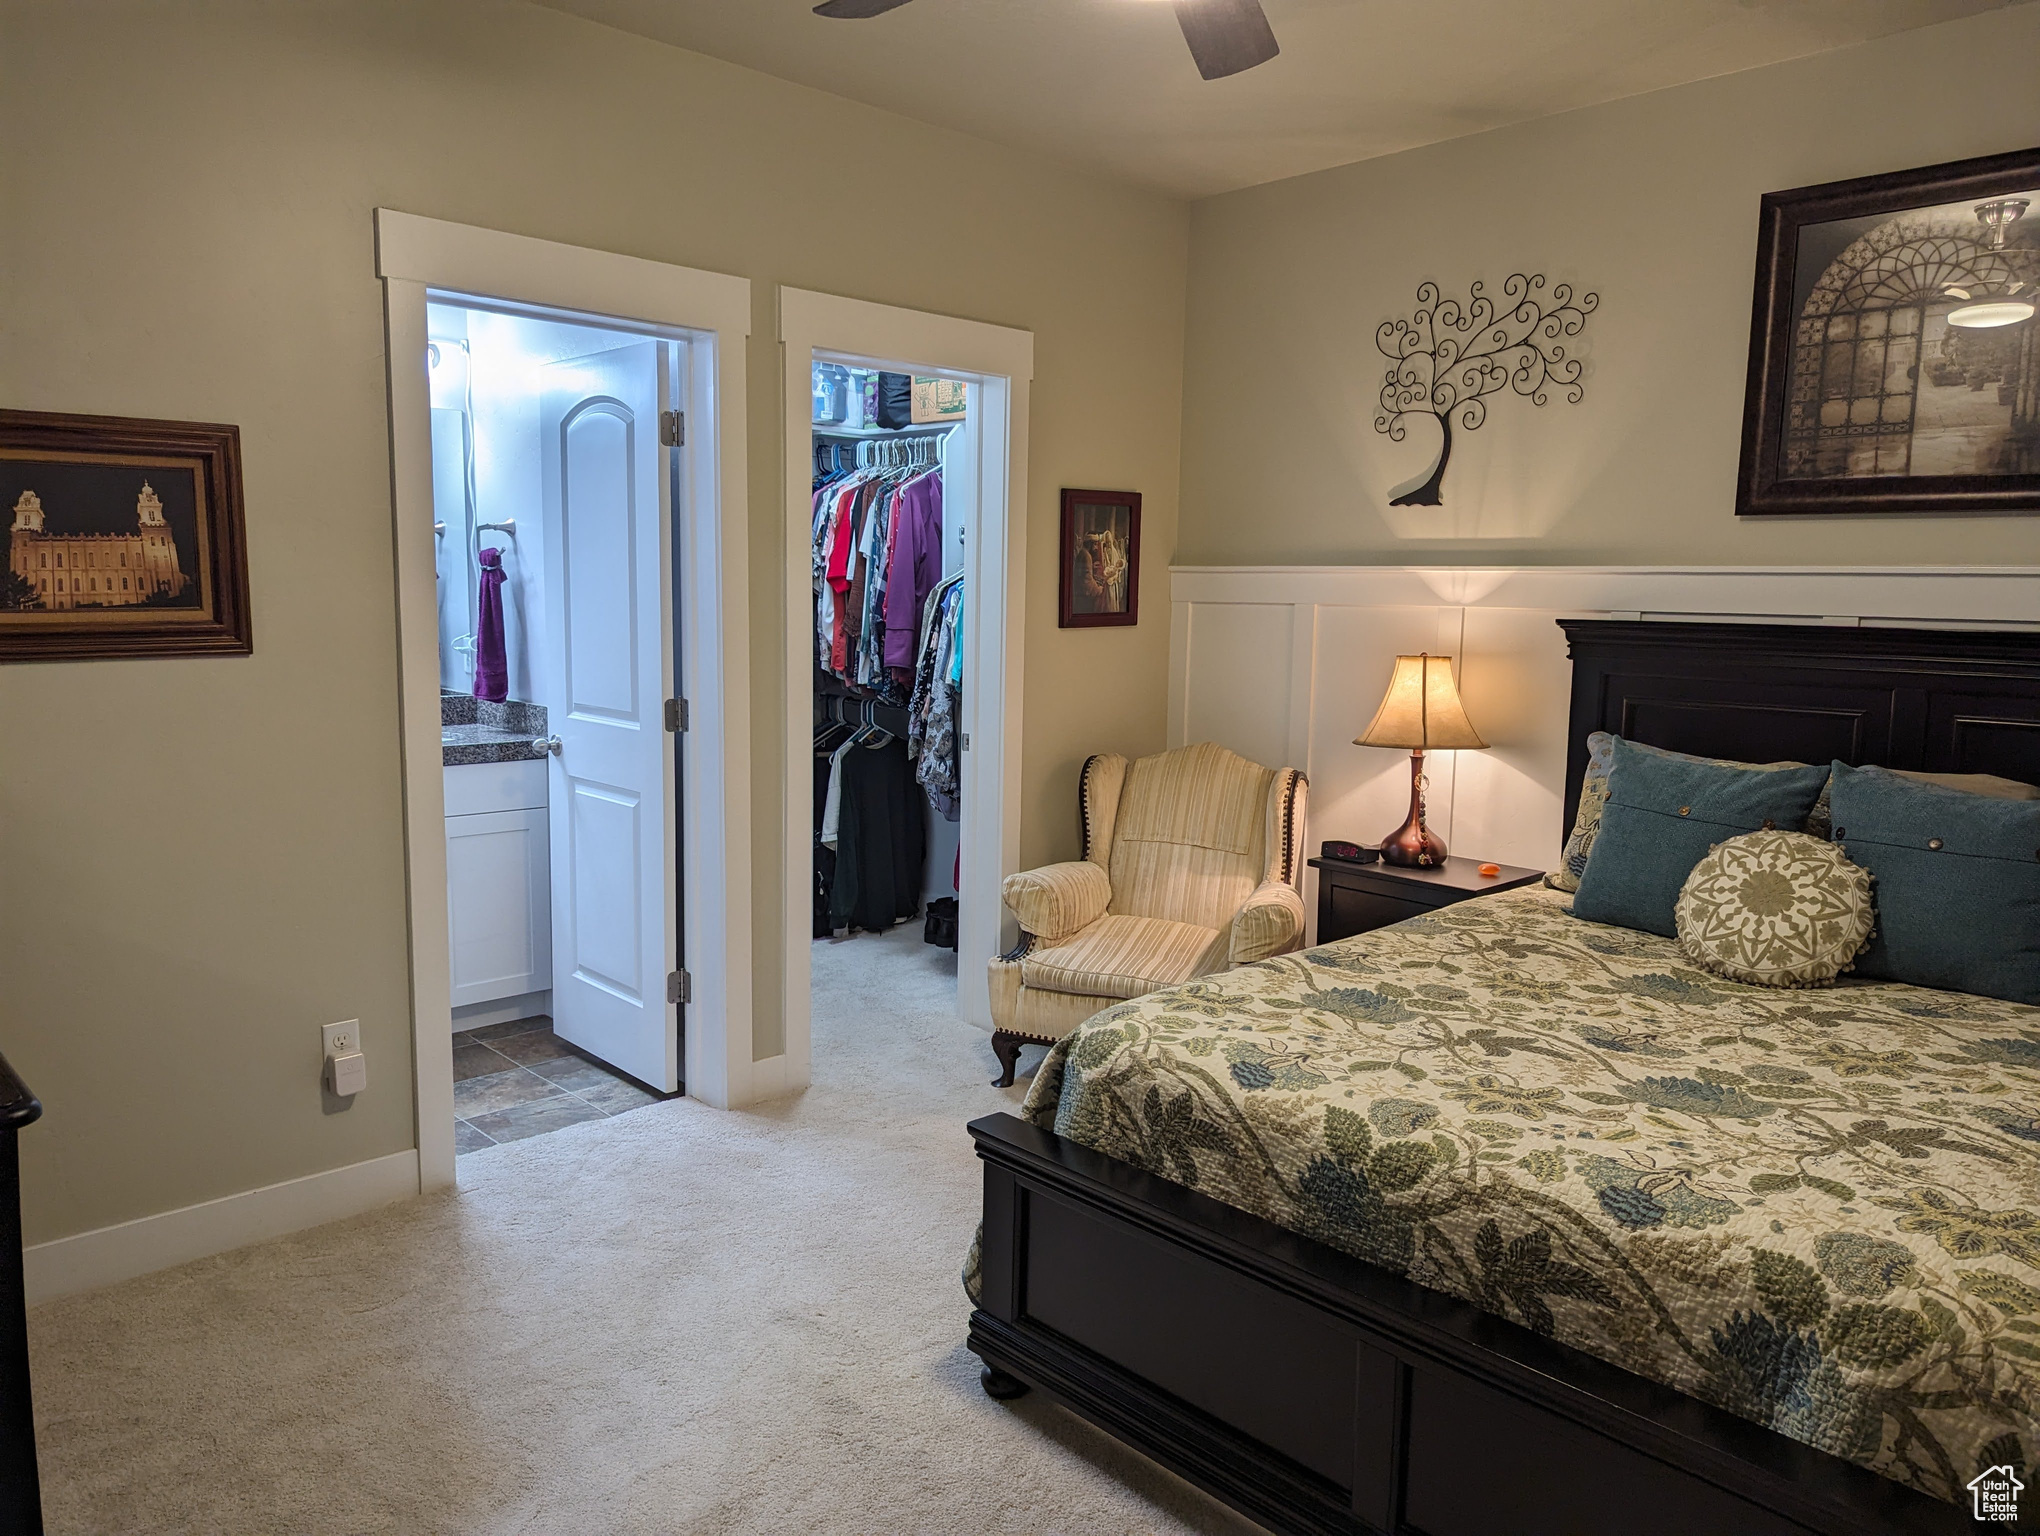 Bedroom with light colored carpet, a spacious closet, ensuite bath, ceiling fan, and a closet